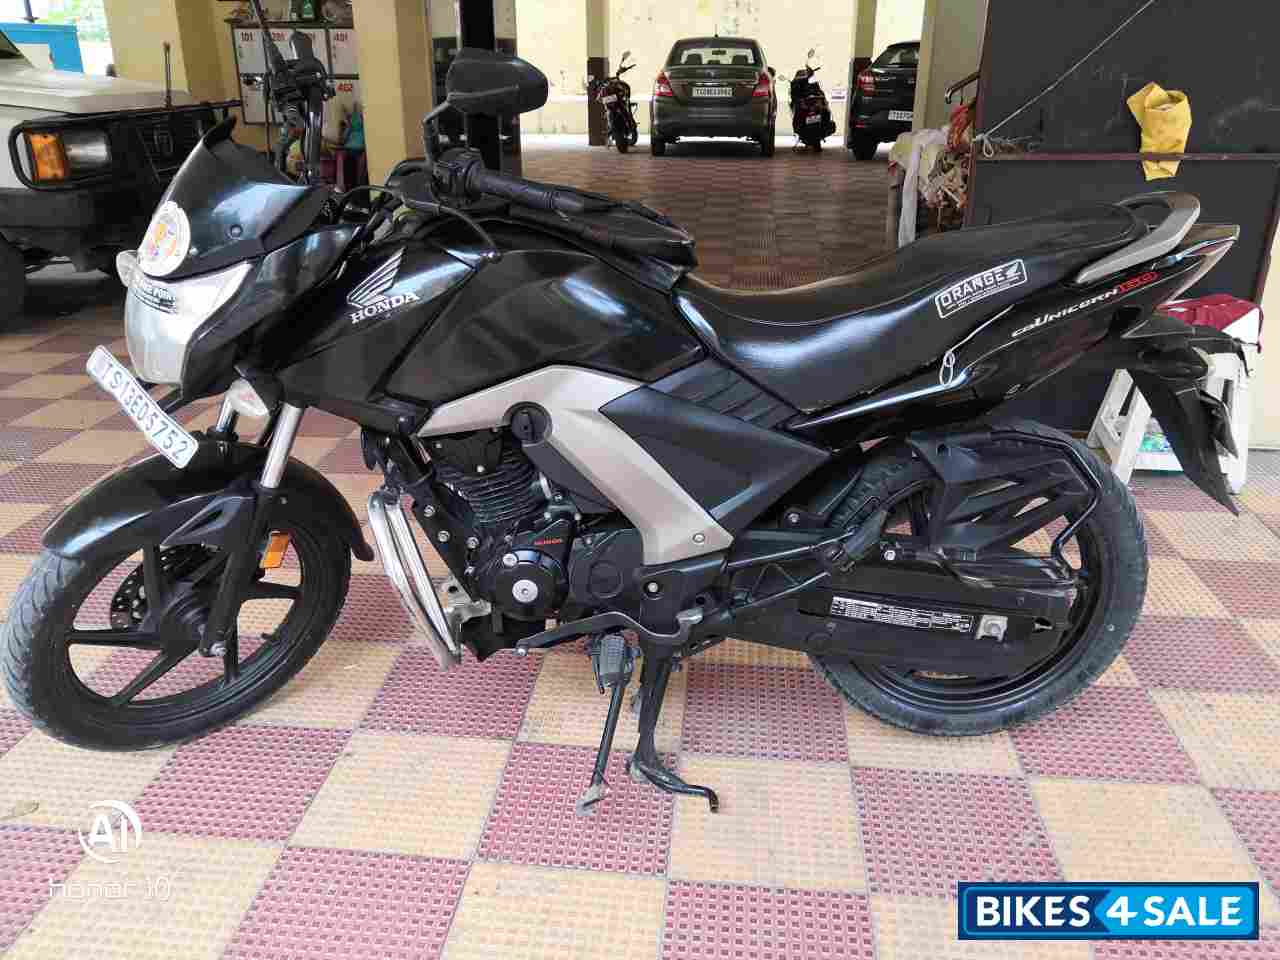 Used 2015 model Honda CB Unicorn 160 for sale in Hyderabad. ID 248153 ...